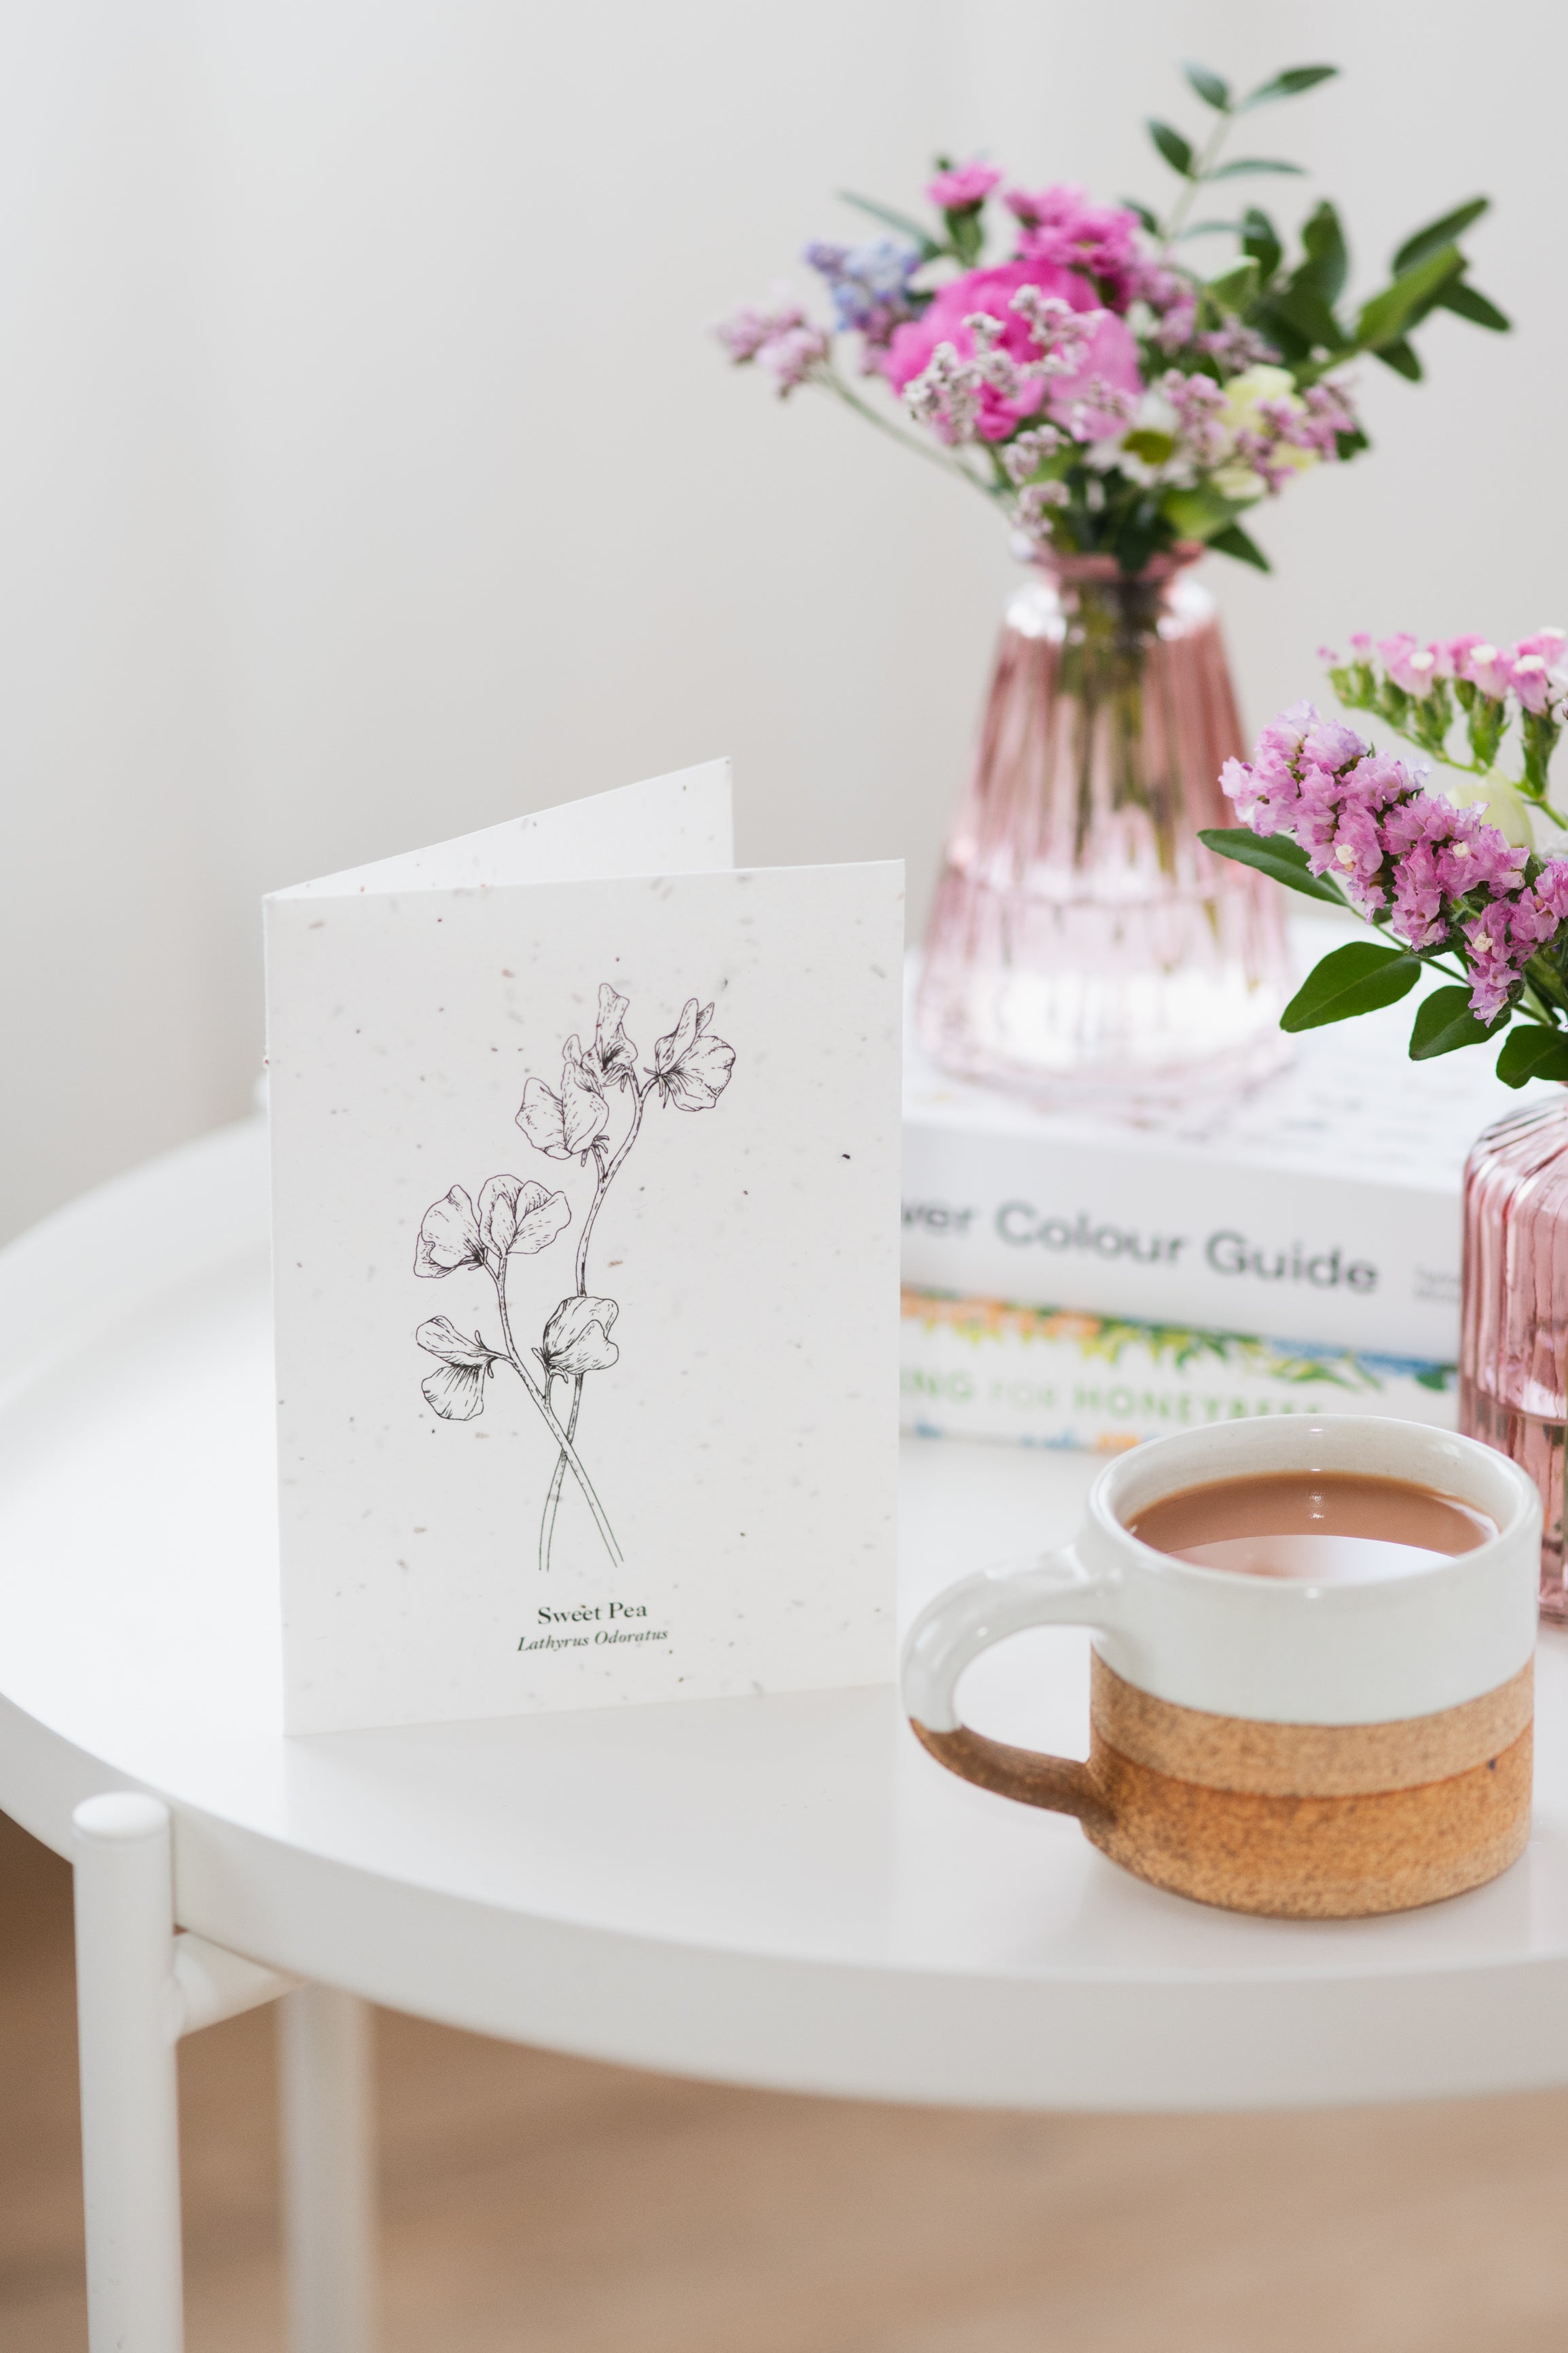 Sweet Pea April Birth Flower Plantable Card - Symbolising &